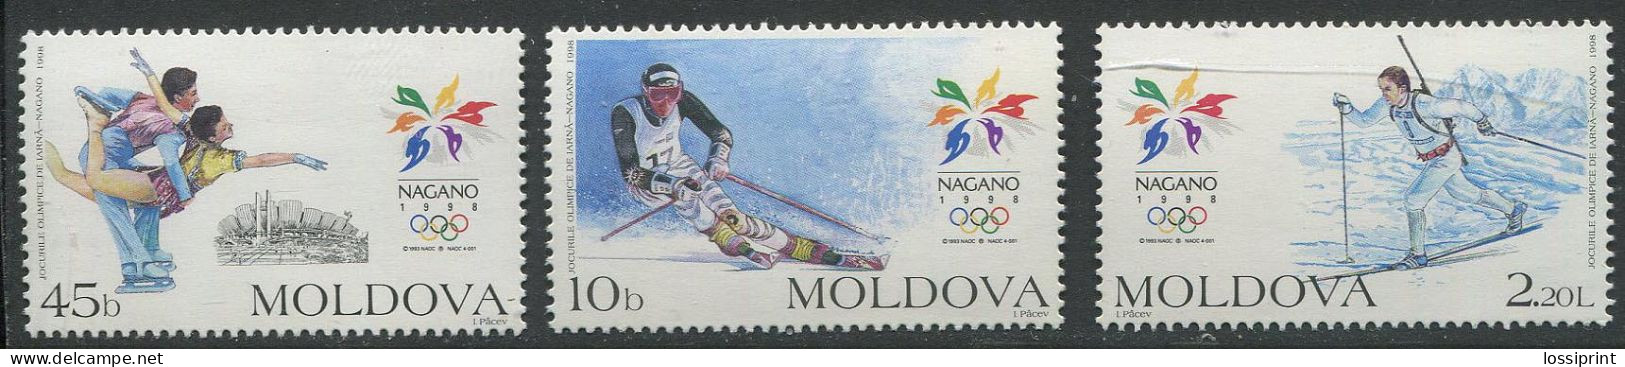 Moldova:Unused Stamps Serie Nagano Olympic Games 1998, Figure Skating, Slalom, Biathlon, MNH - Winter 1998: Nagano